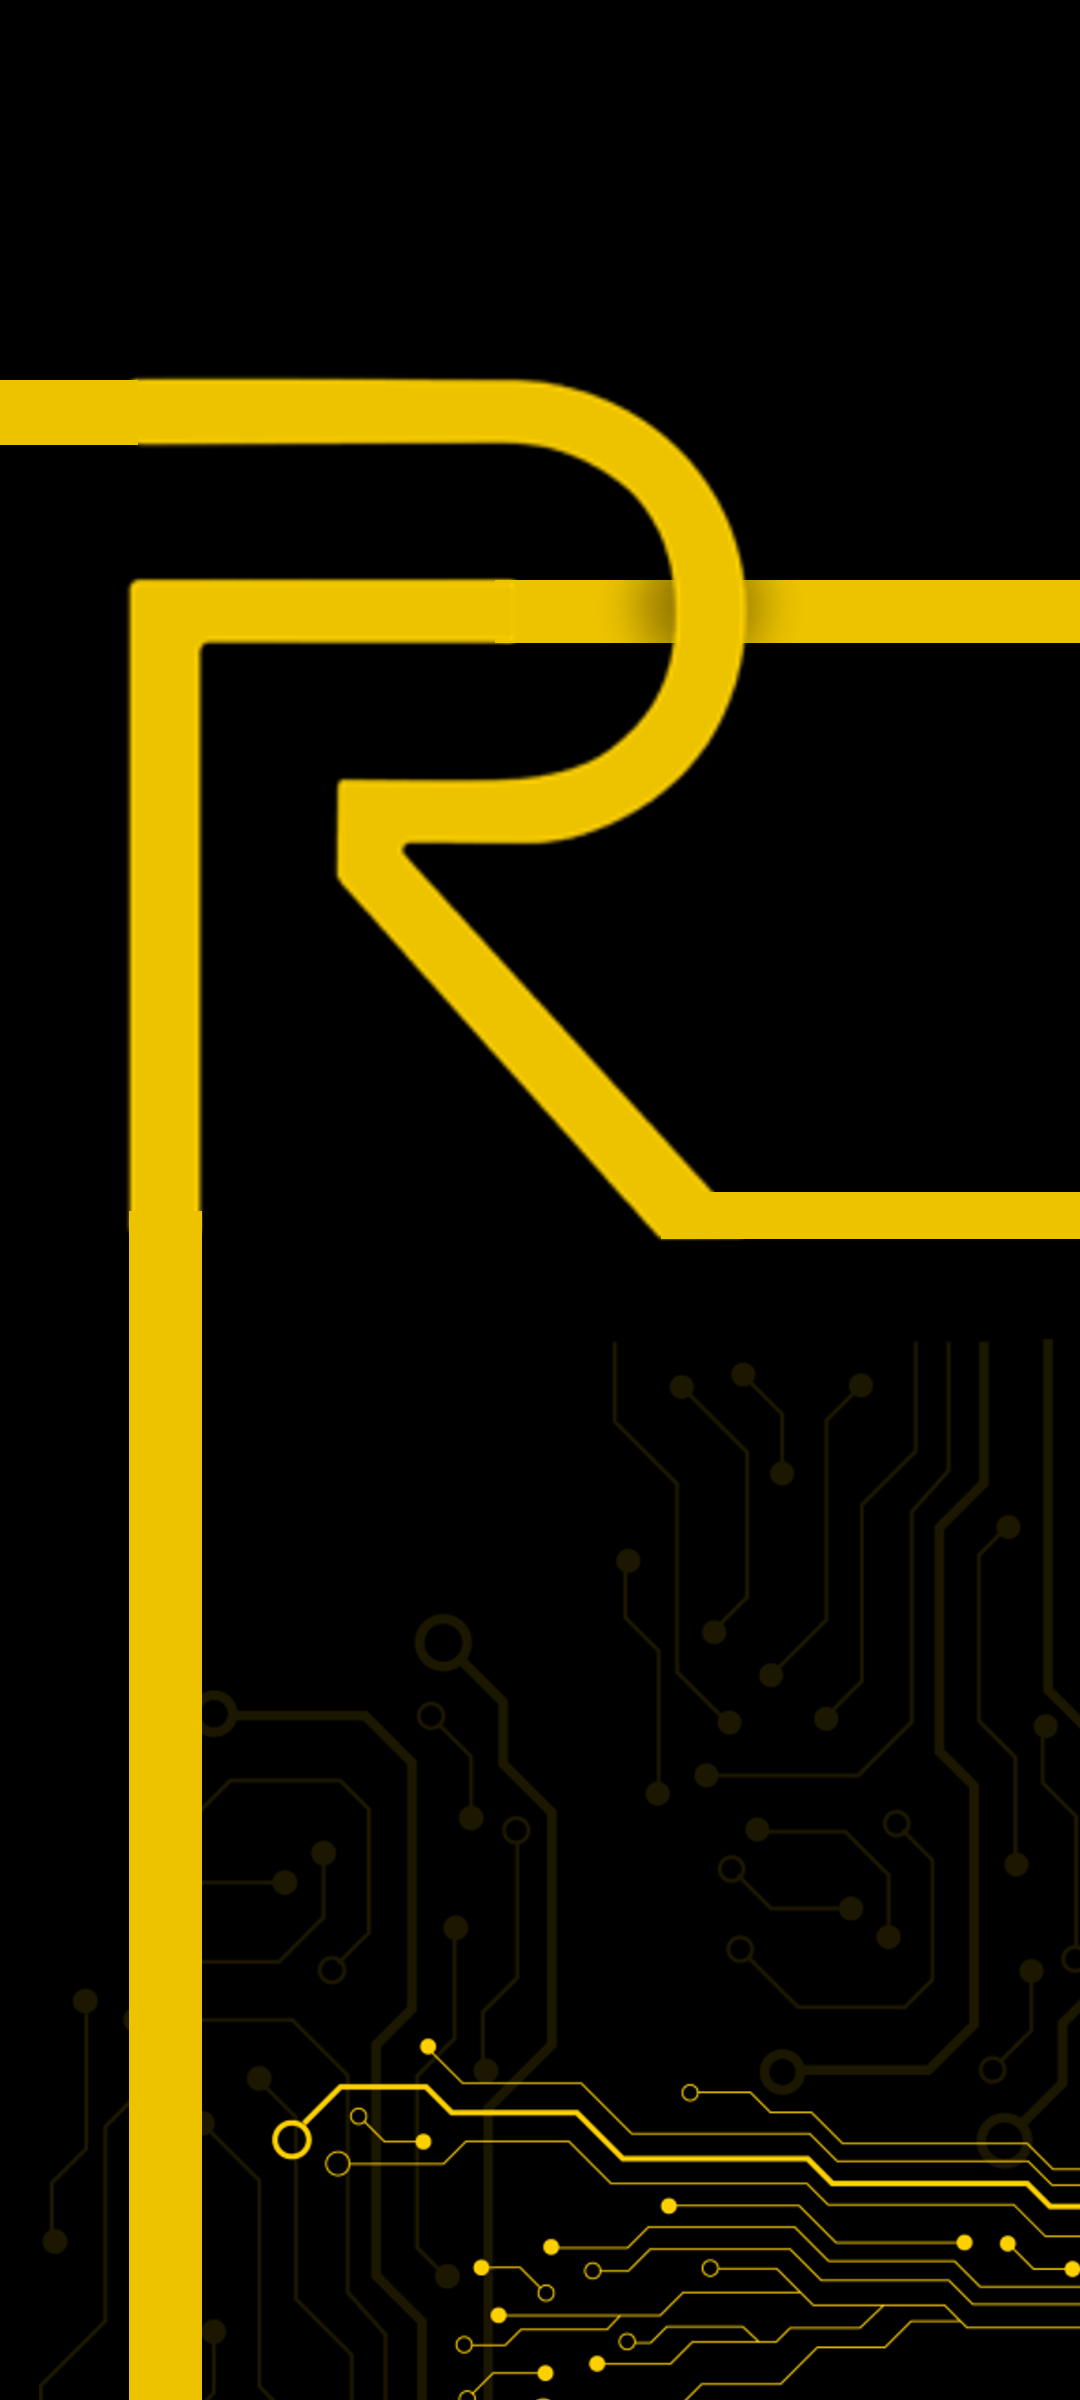 Has Oppo's sub brand Realme taken inspiration from Redmi?